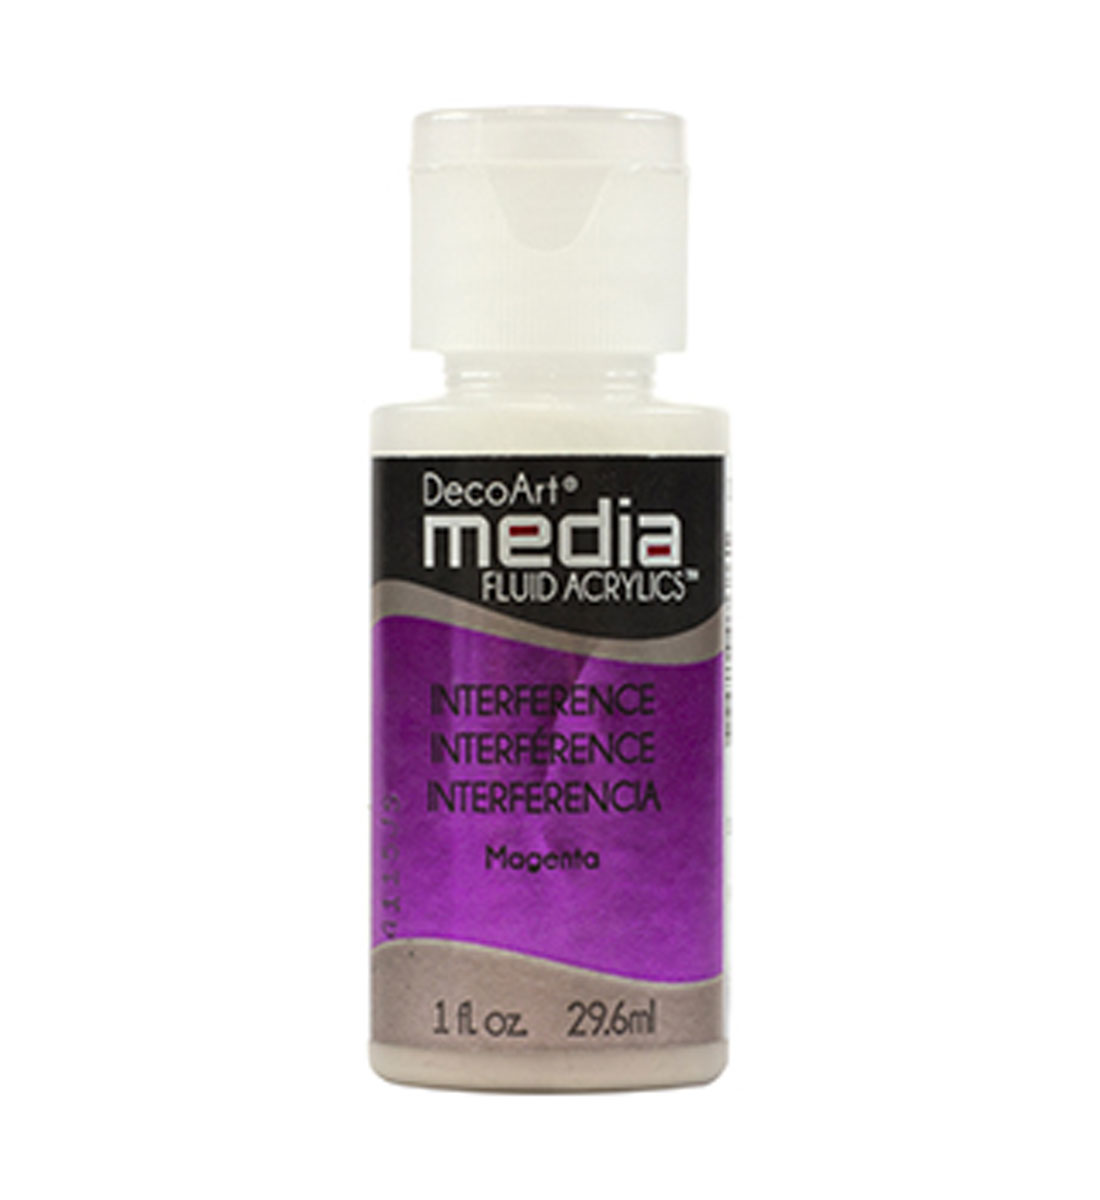 DecoArt Media Fluid Acrylic Paint - Magenta Interference